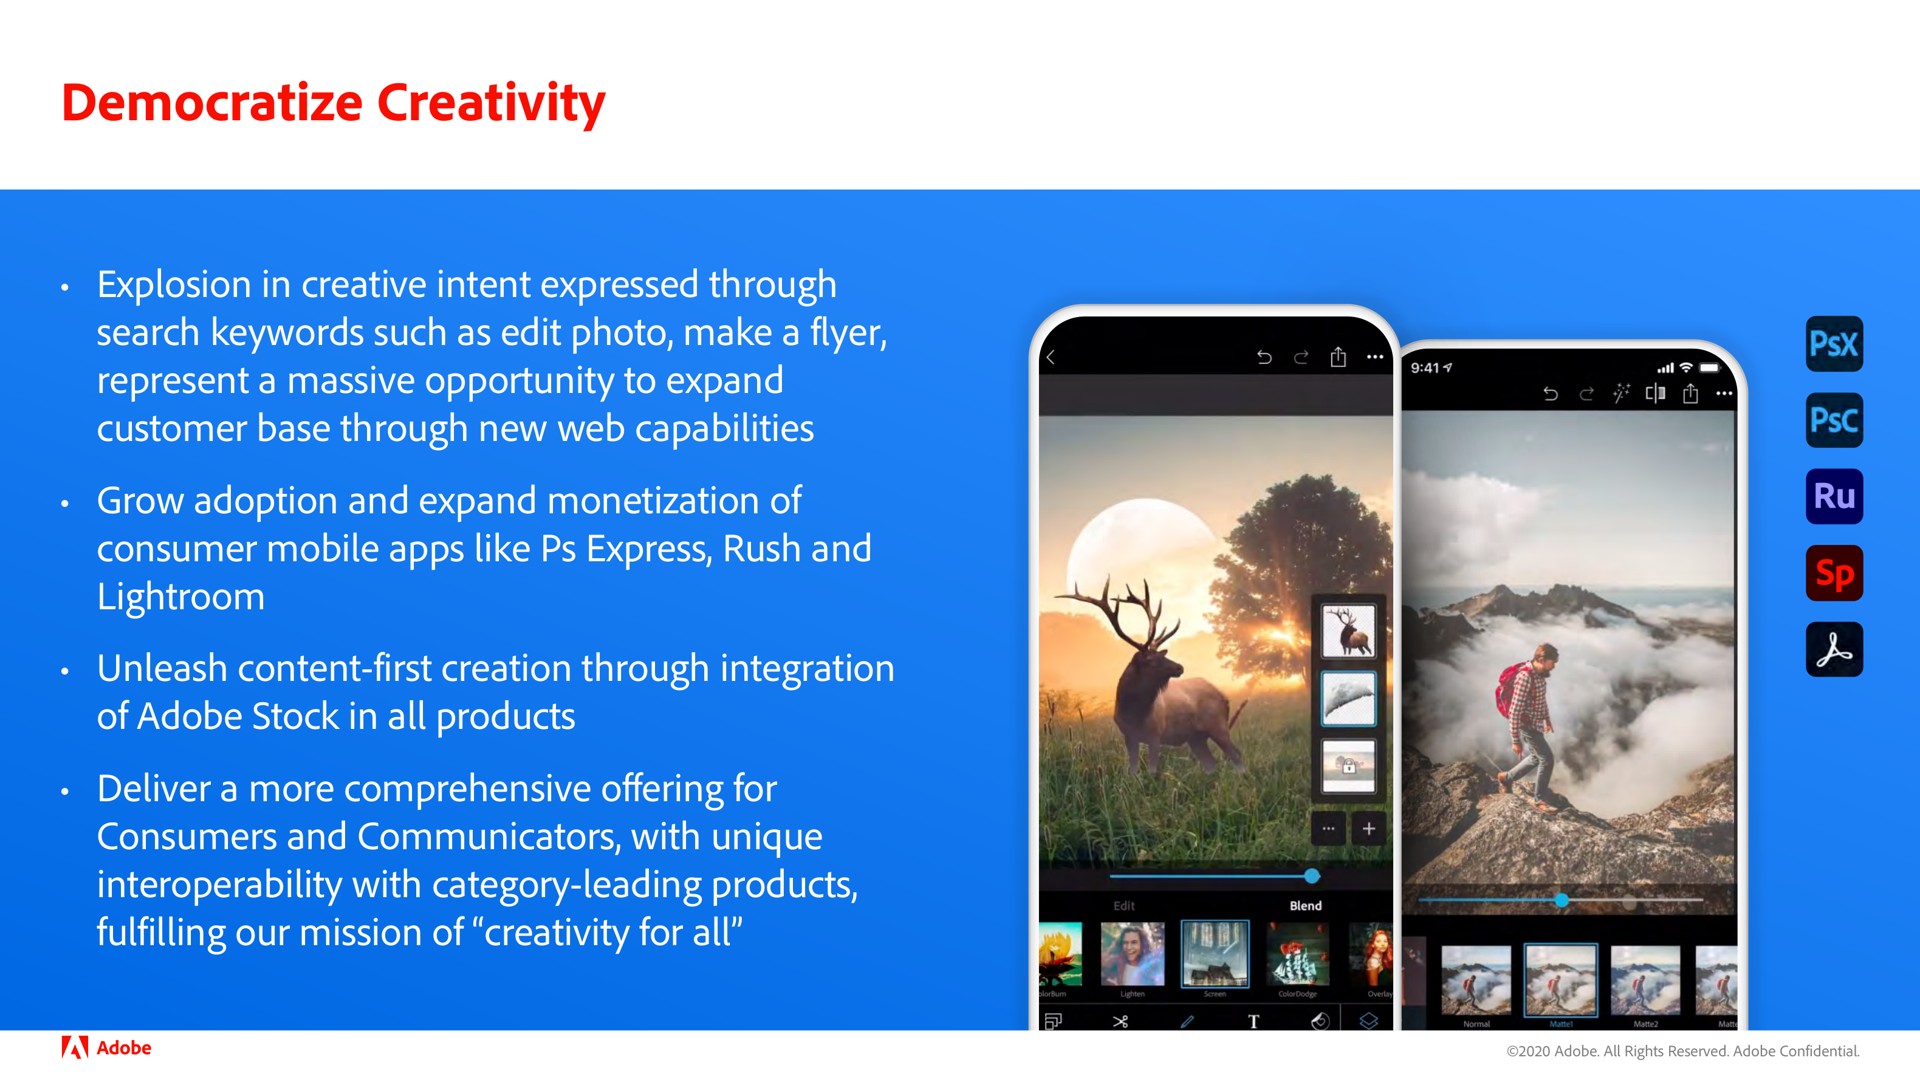 democratize creativity | Adobe